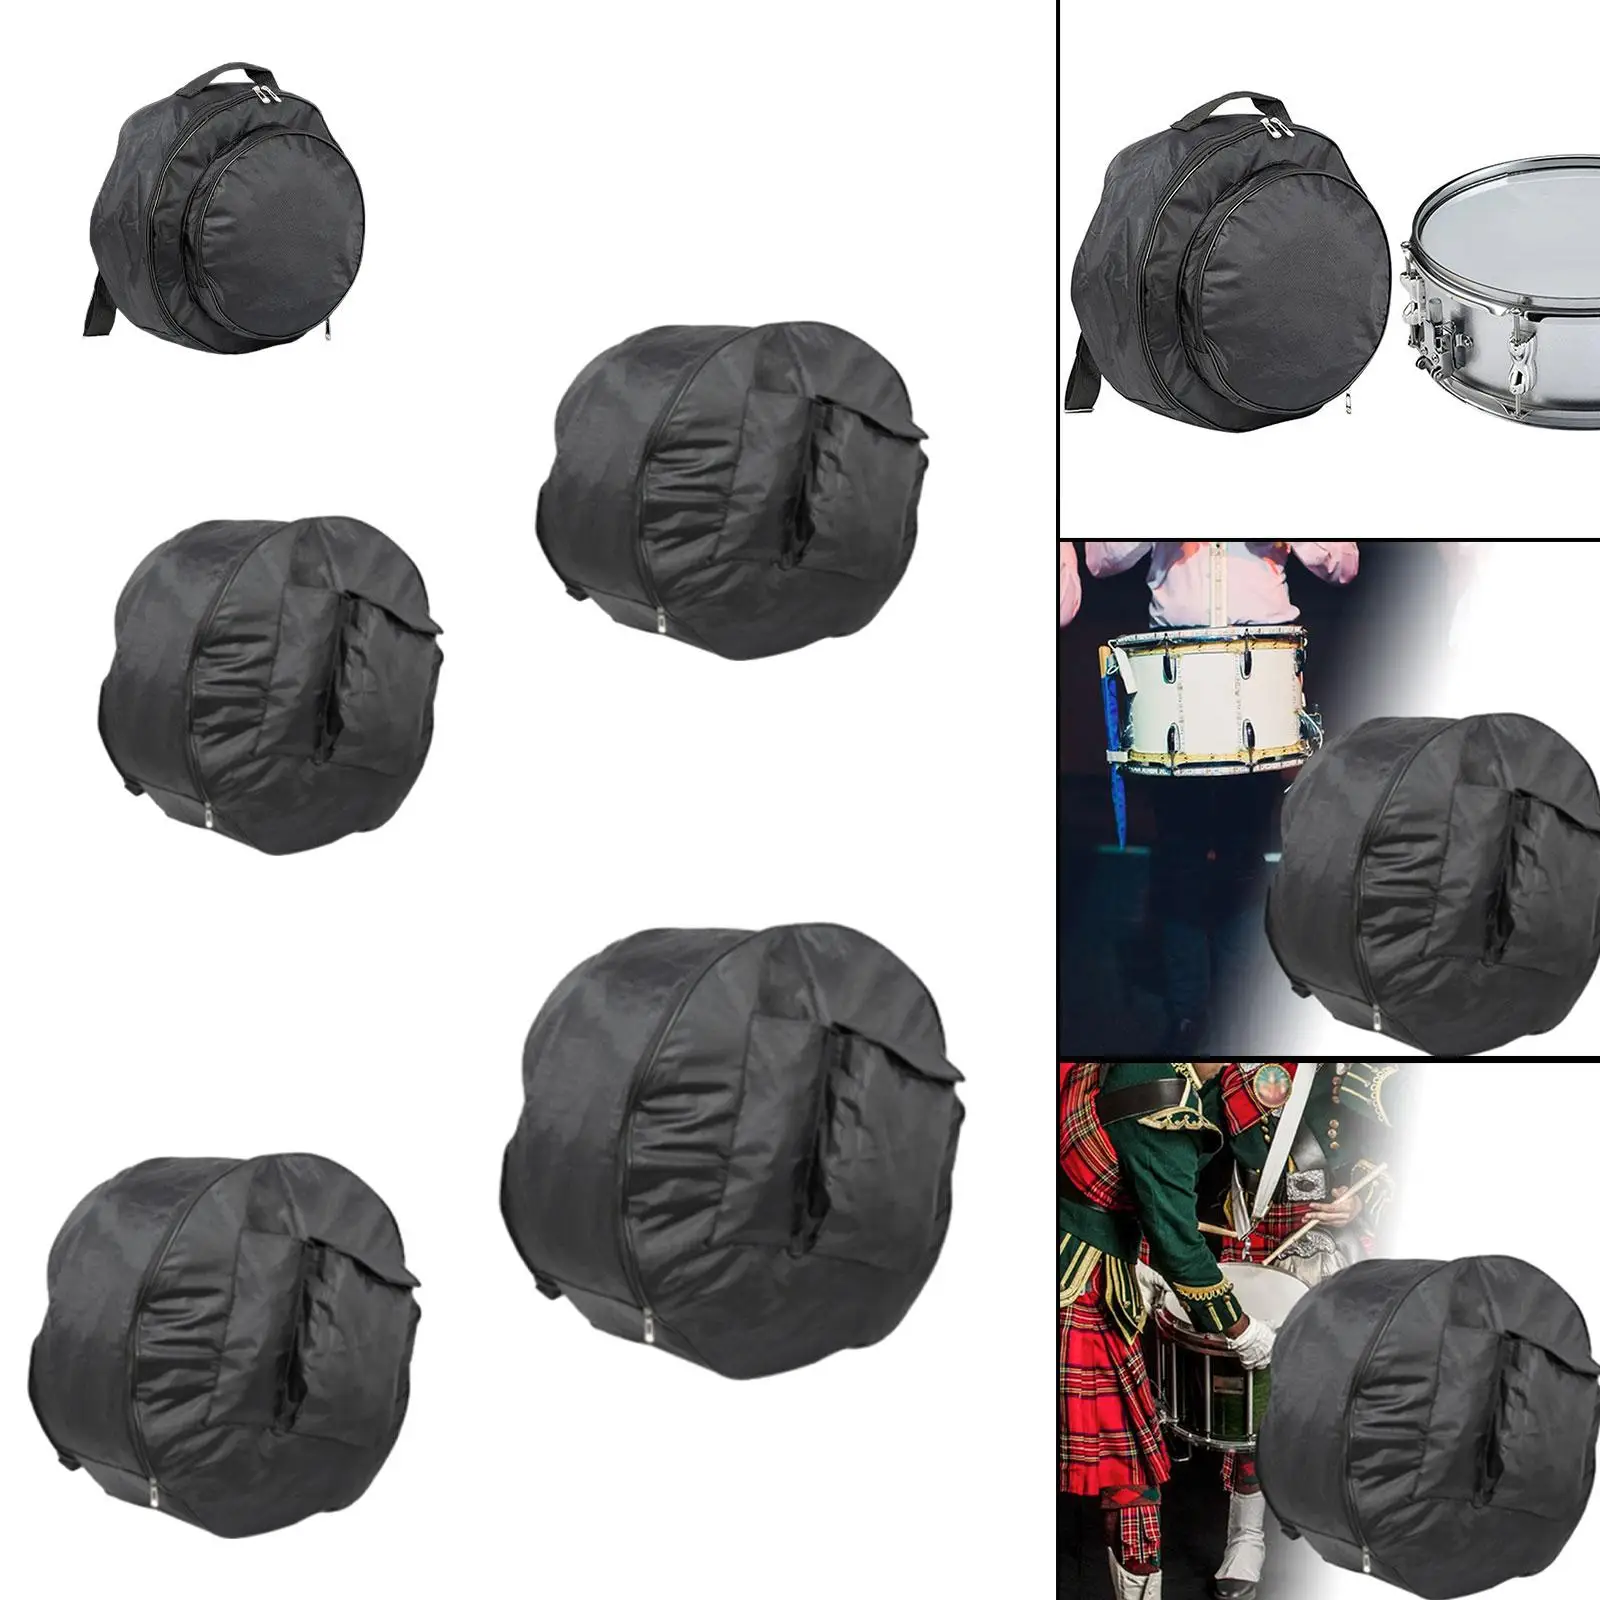 Snare Drum Bag Dustproof Oxford Cloth Carry Bag for Brackets Drum Pads